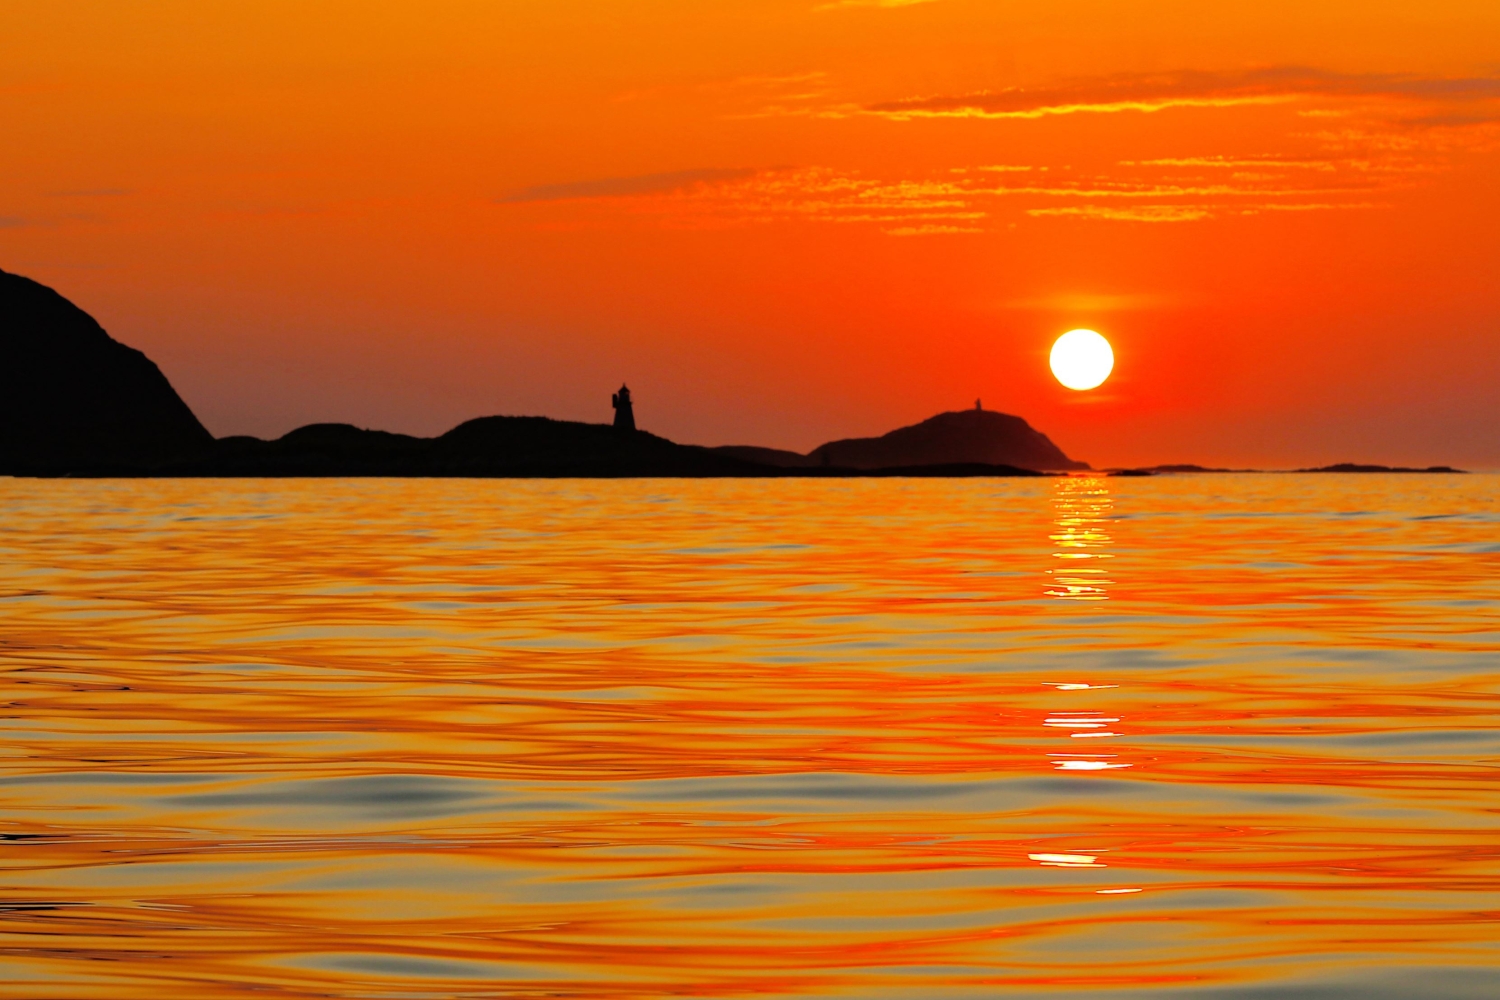 Midnight sun coloring the sky and sea orange